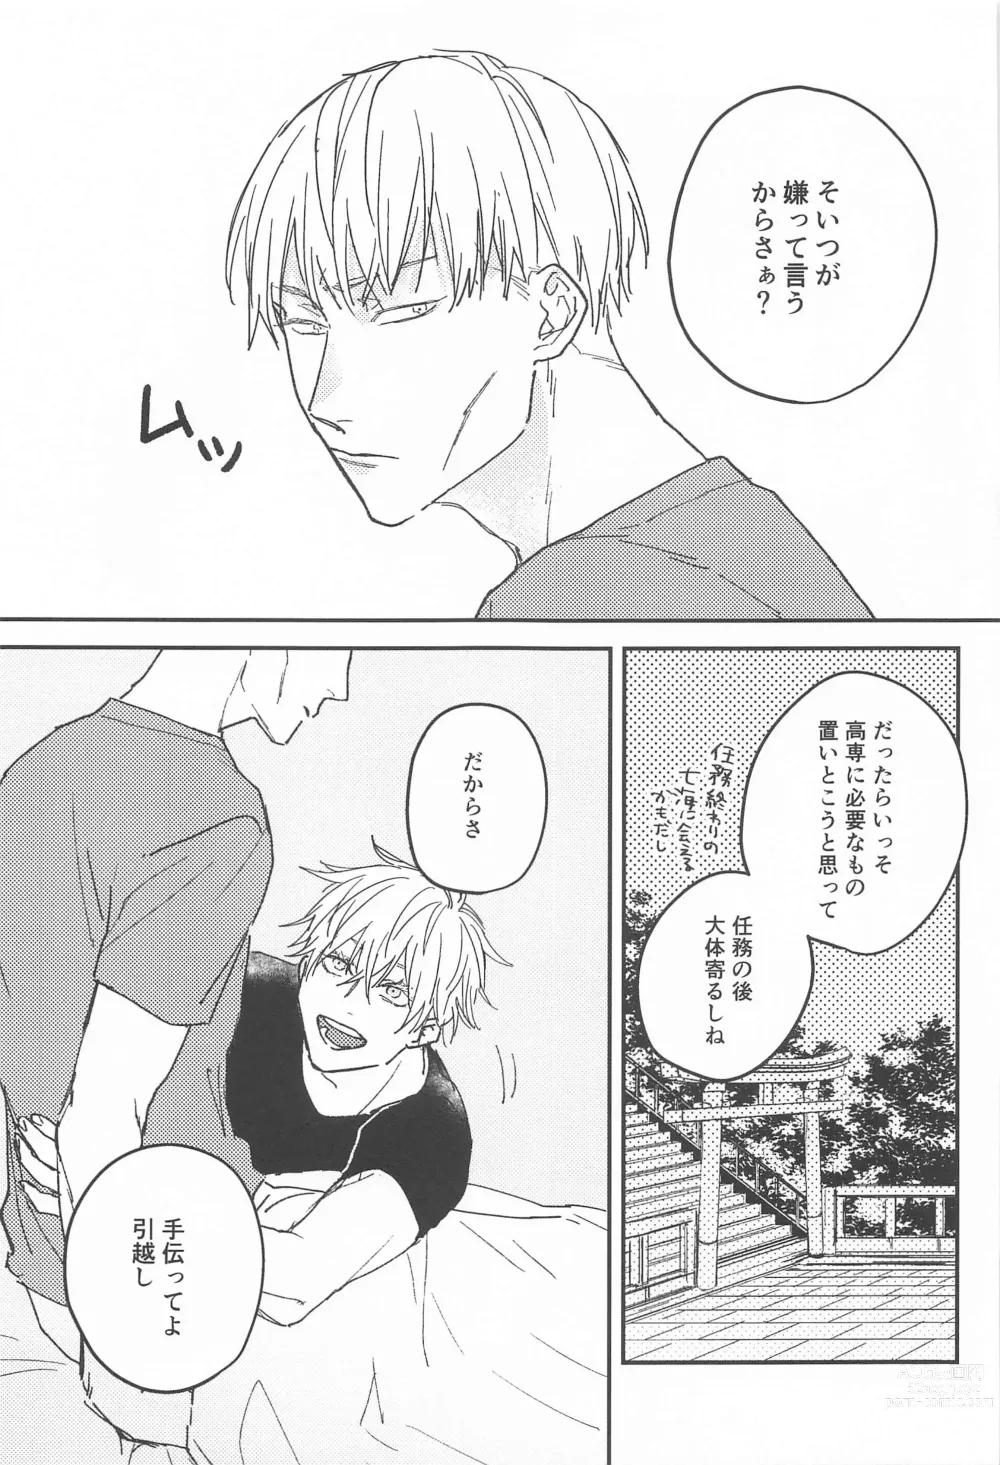 Page 4 of doujinshi 10years